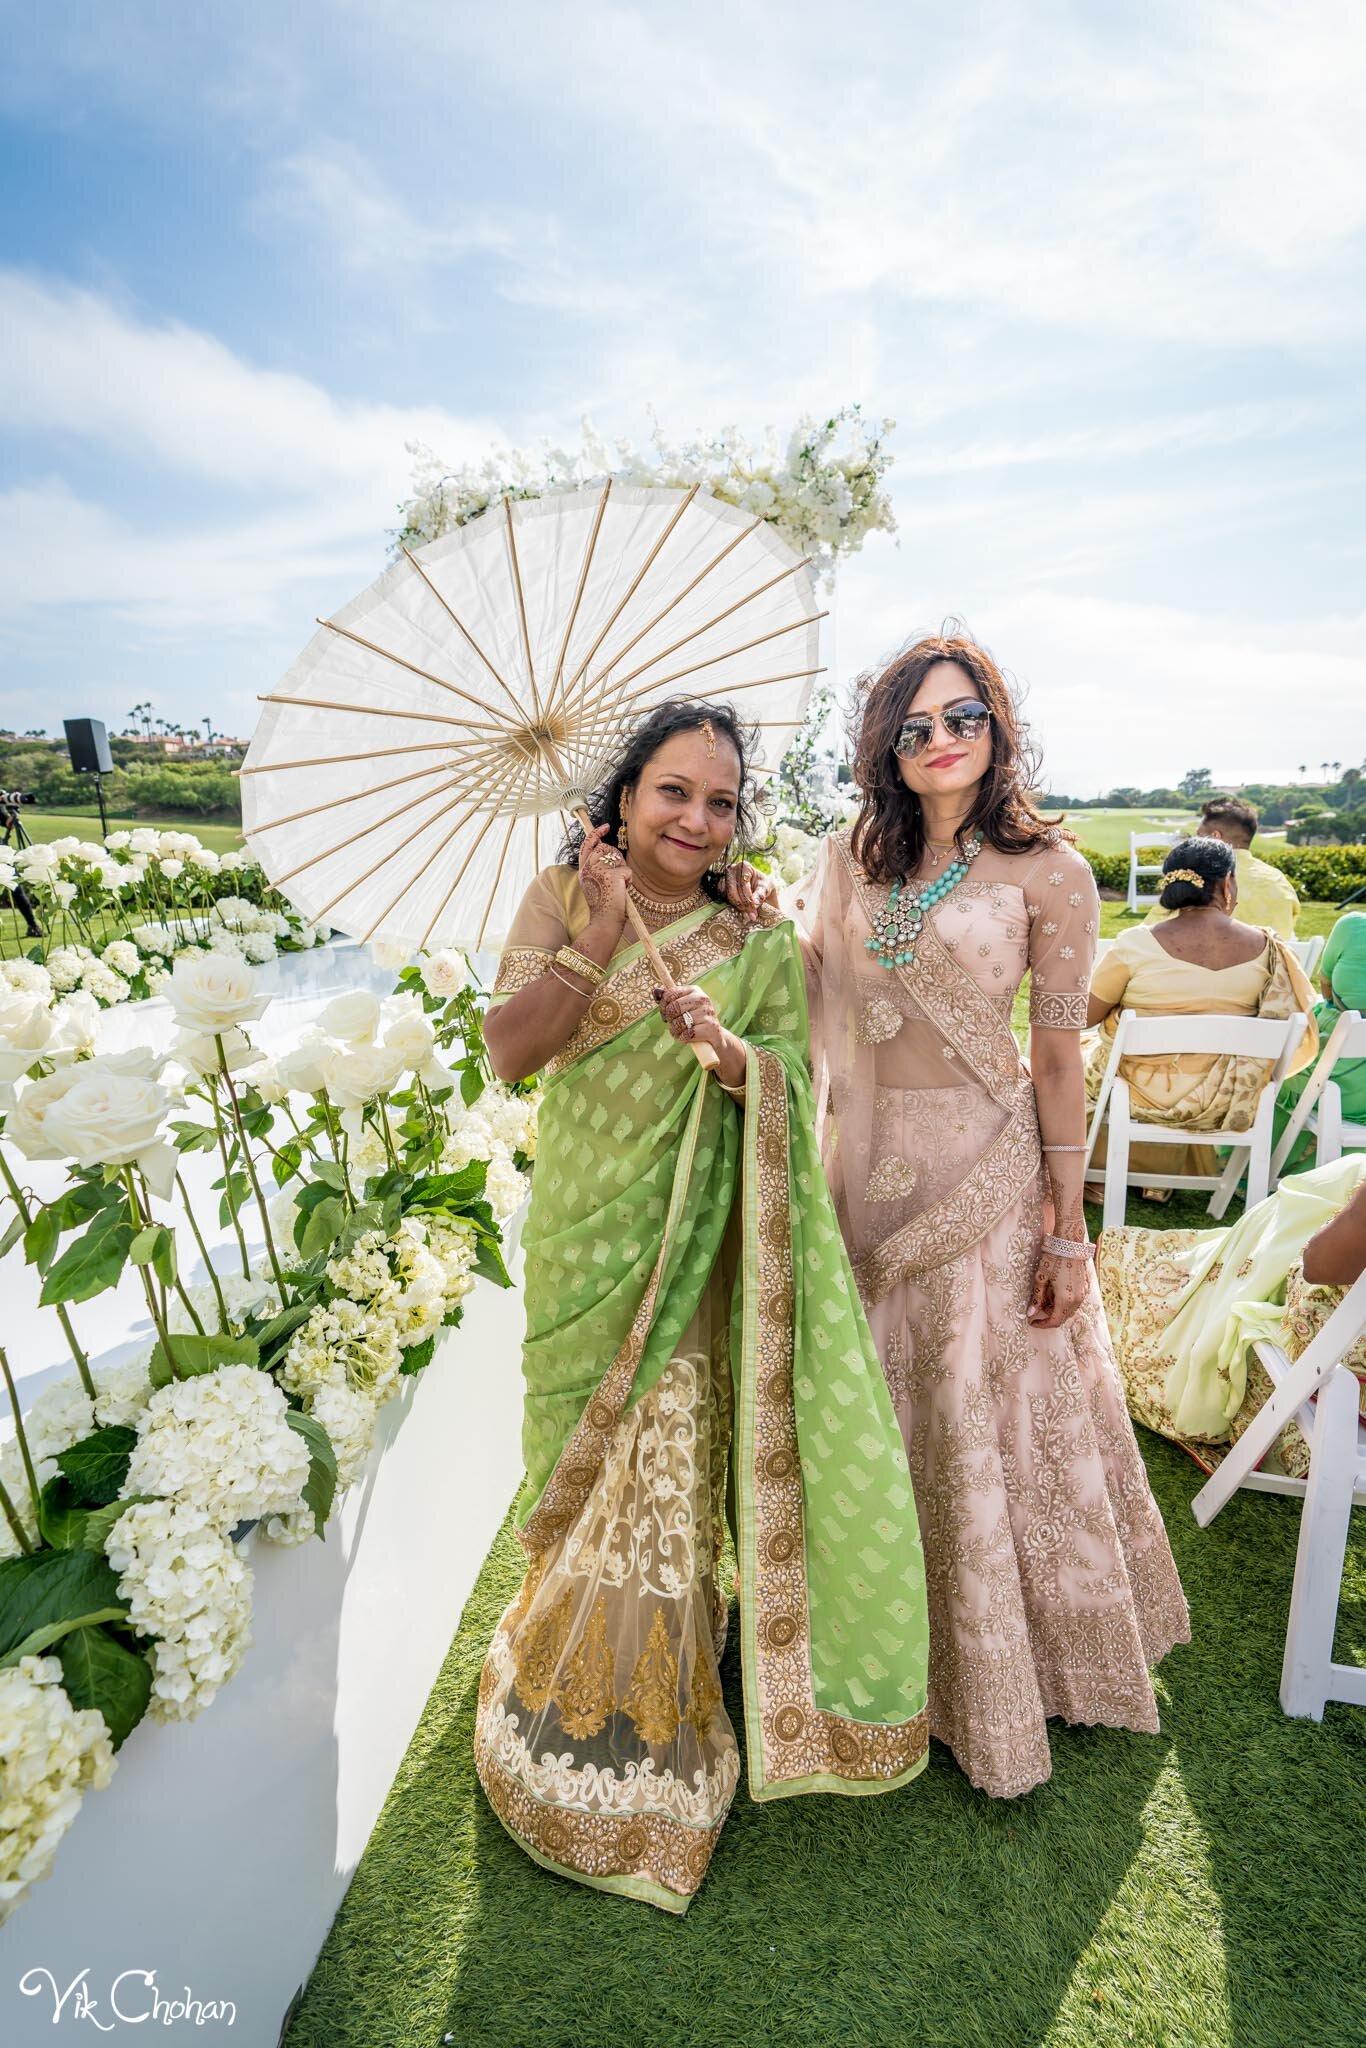 2021-07-30-Shaan-&-Megha-Wedding-Vik-Chohan-Photography-Photo-Booth-Social-Media-VCP-249.jpg